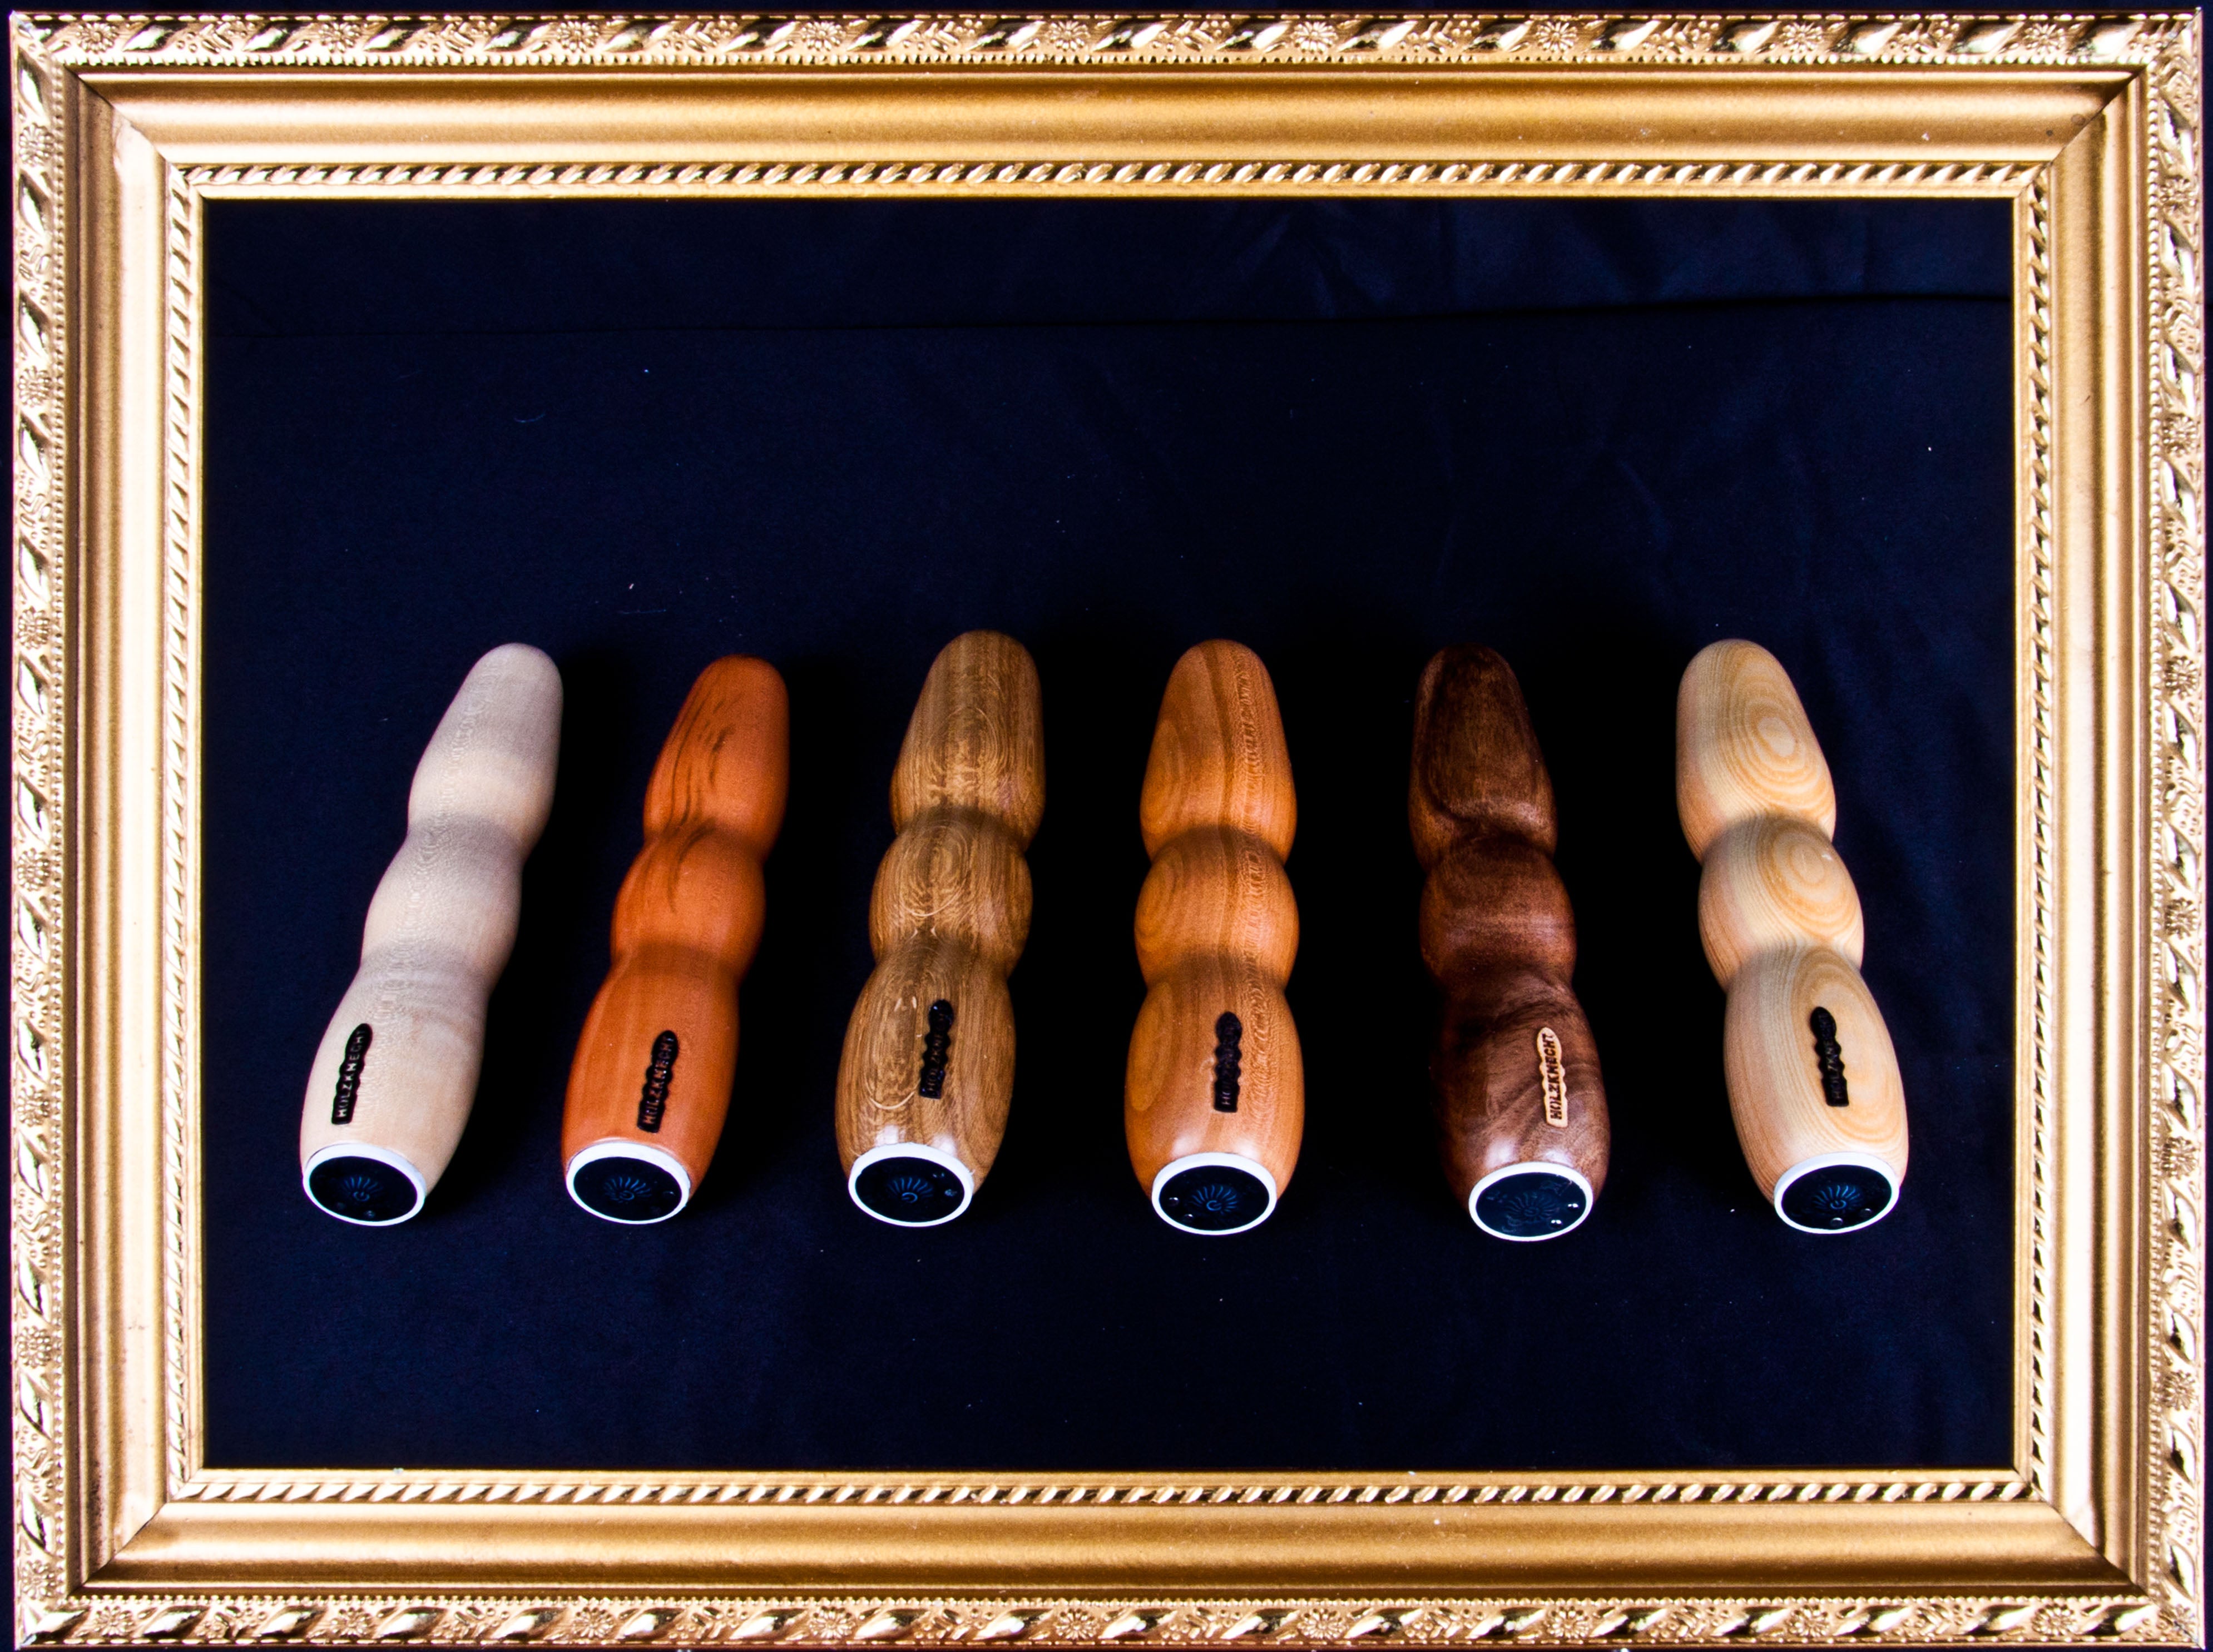 SUMMSI || Holzknecht || Hoamatland || Holzvibrator || Holzdildo || Sex Toy || Wood Vibrator || handmade by Holz-Knecht